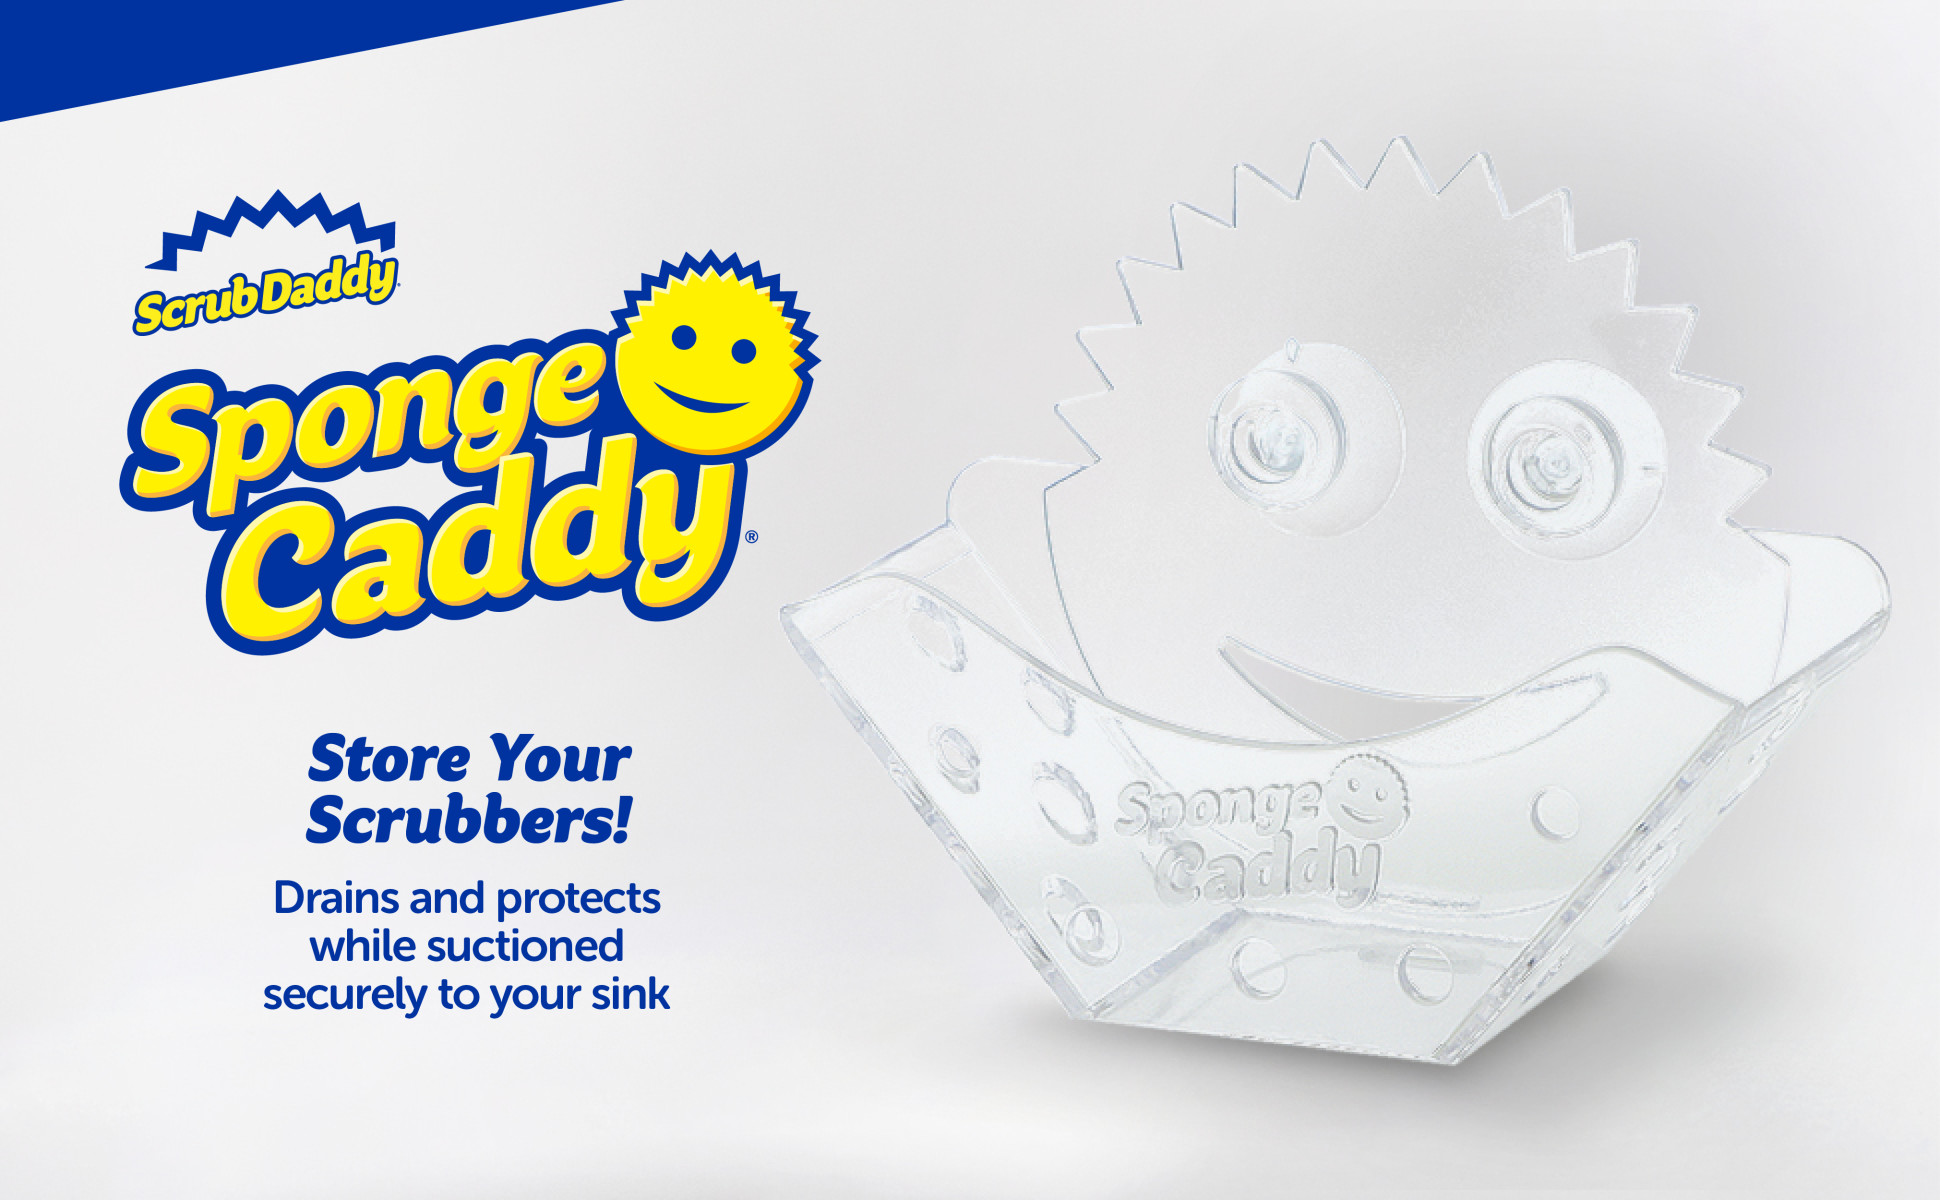 Scrub daddy sponge holder and sponge. #scrubdaddy #sponge #bestspongee, Scrub  Daddy